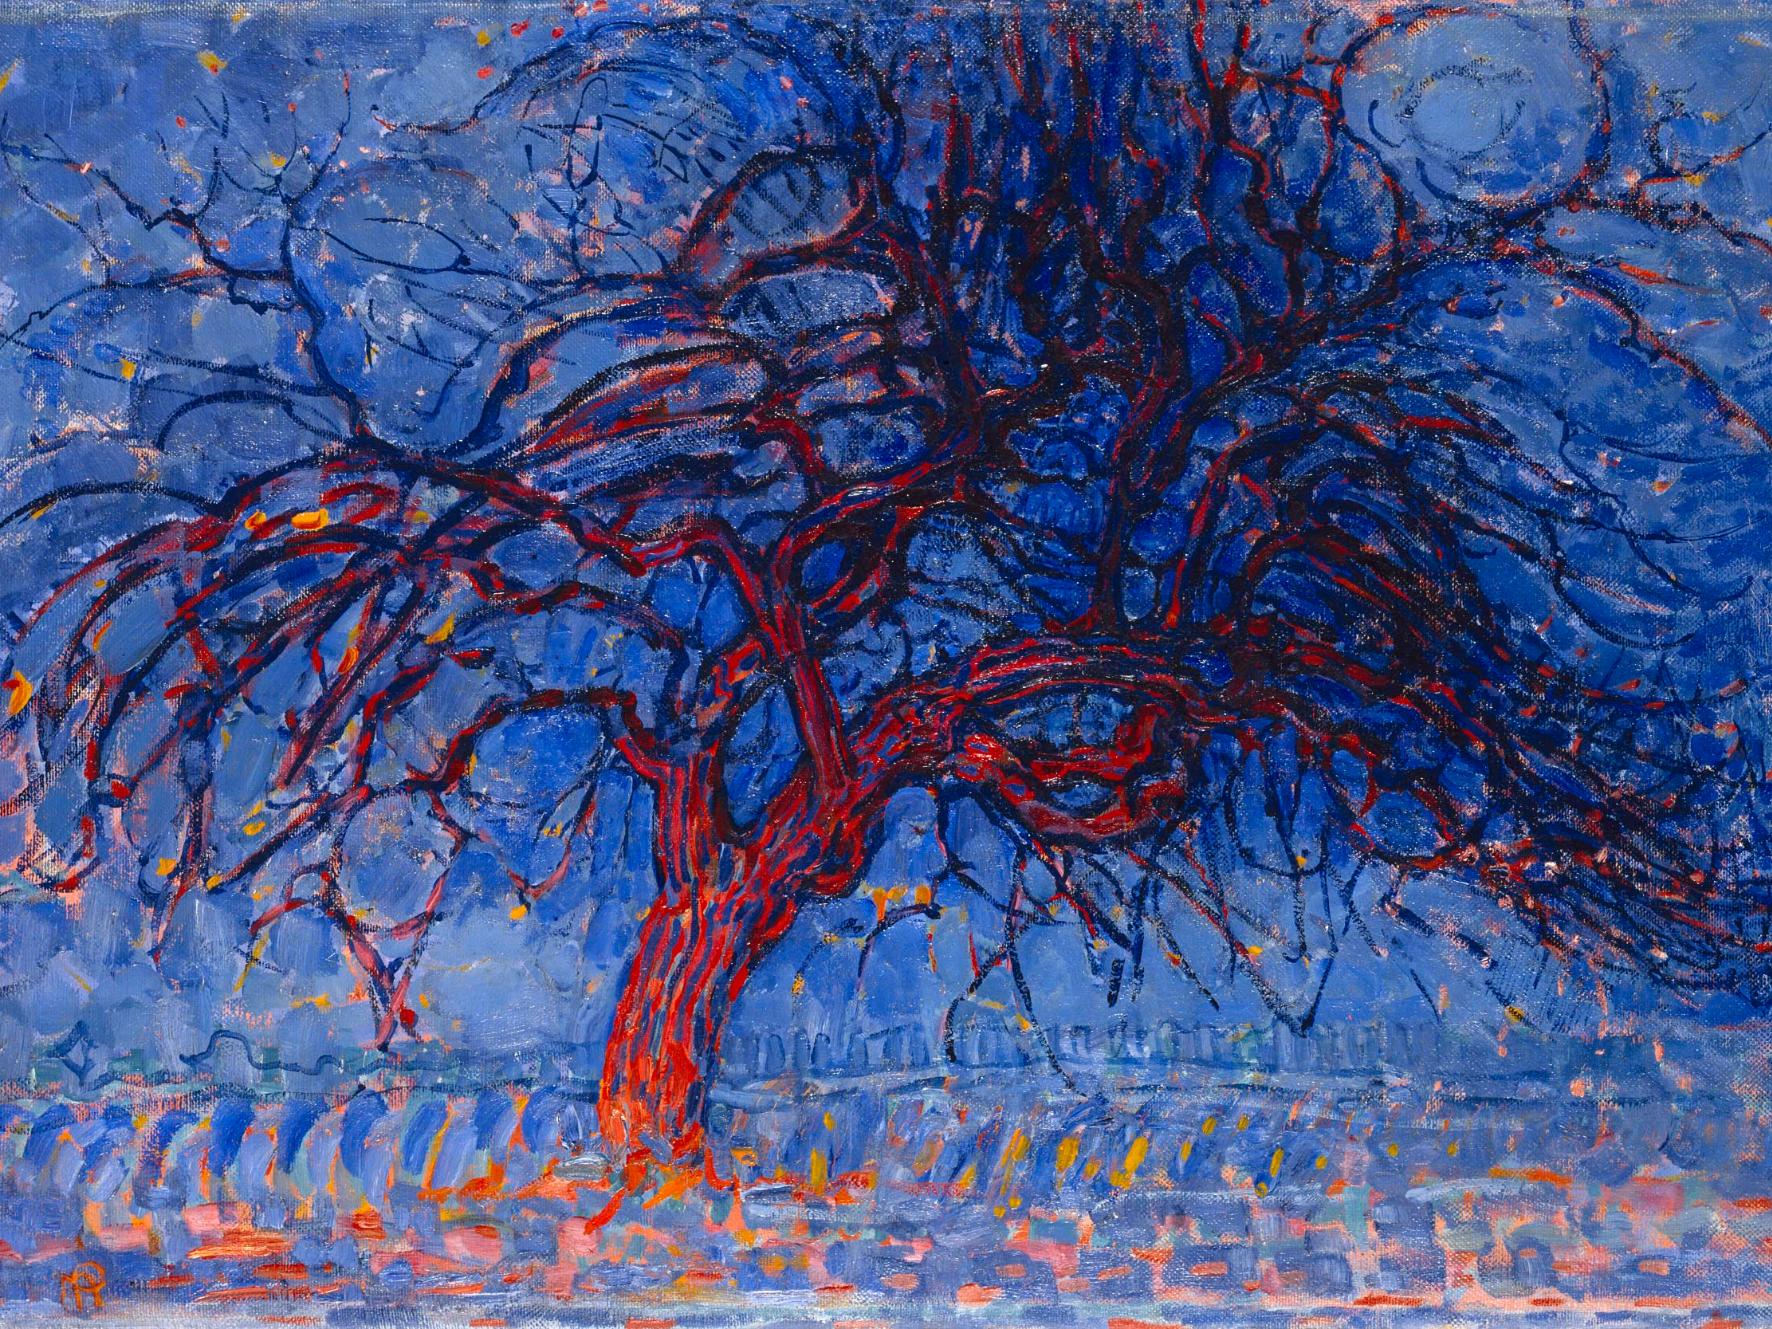 Piet_Mondrian,_1908-10,_Evening;_Red_Tree_(Avond;_De_rode_boom),_oil_on_canvas,_70_x_99_cm,_Gemeentemuseum_Den_Haag